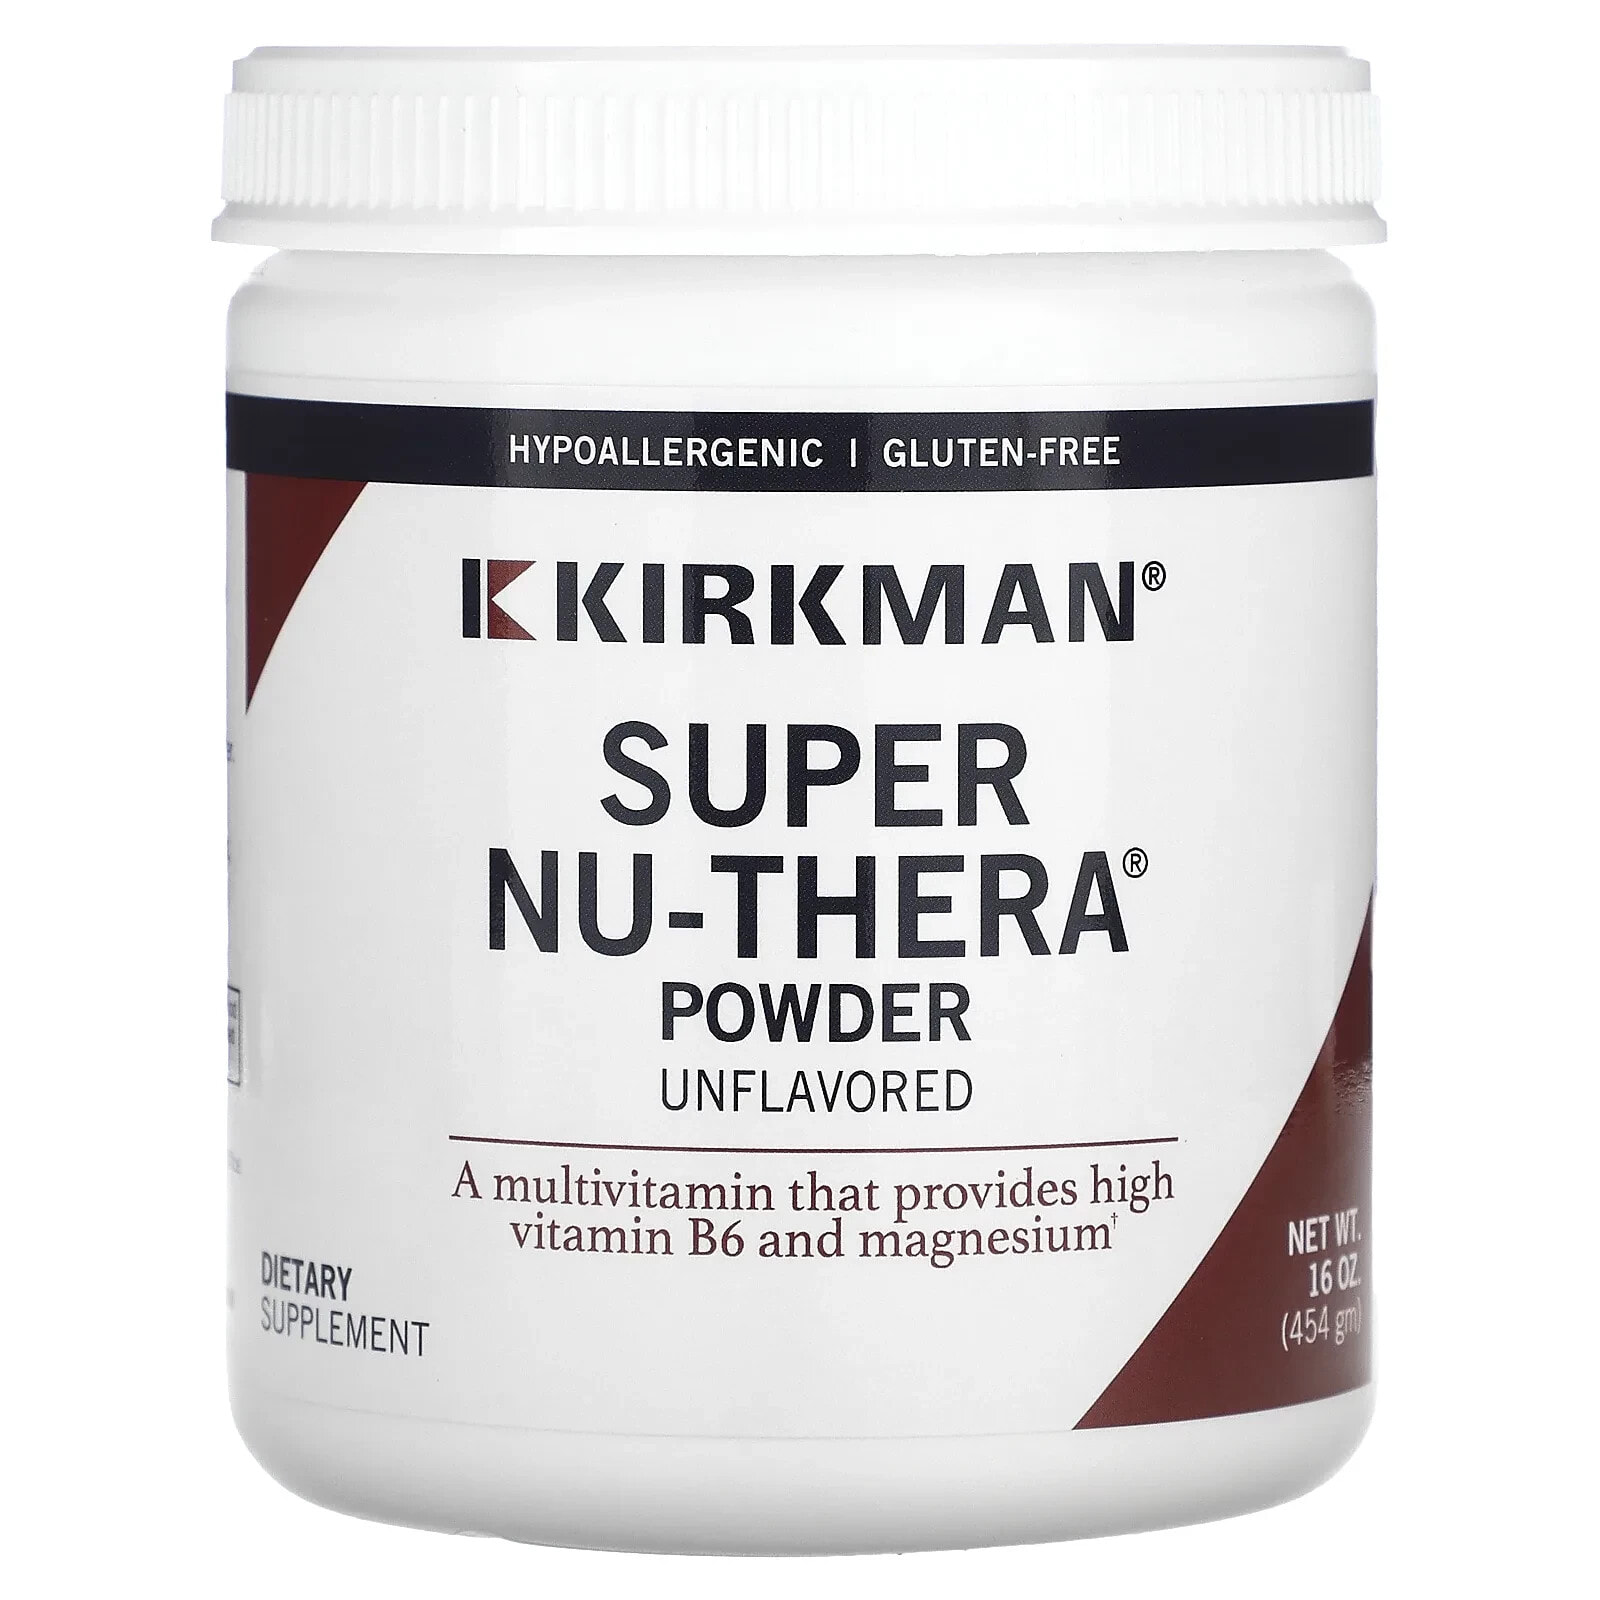 Super Nu-Thera Powder, Unlflavored, 16 oz (454 gm)